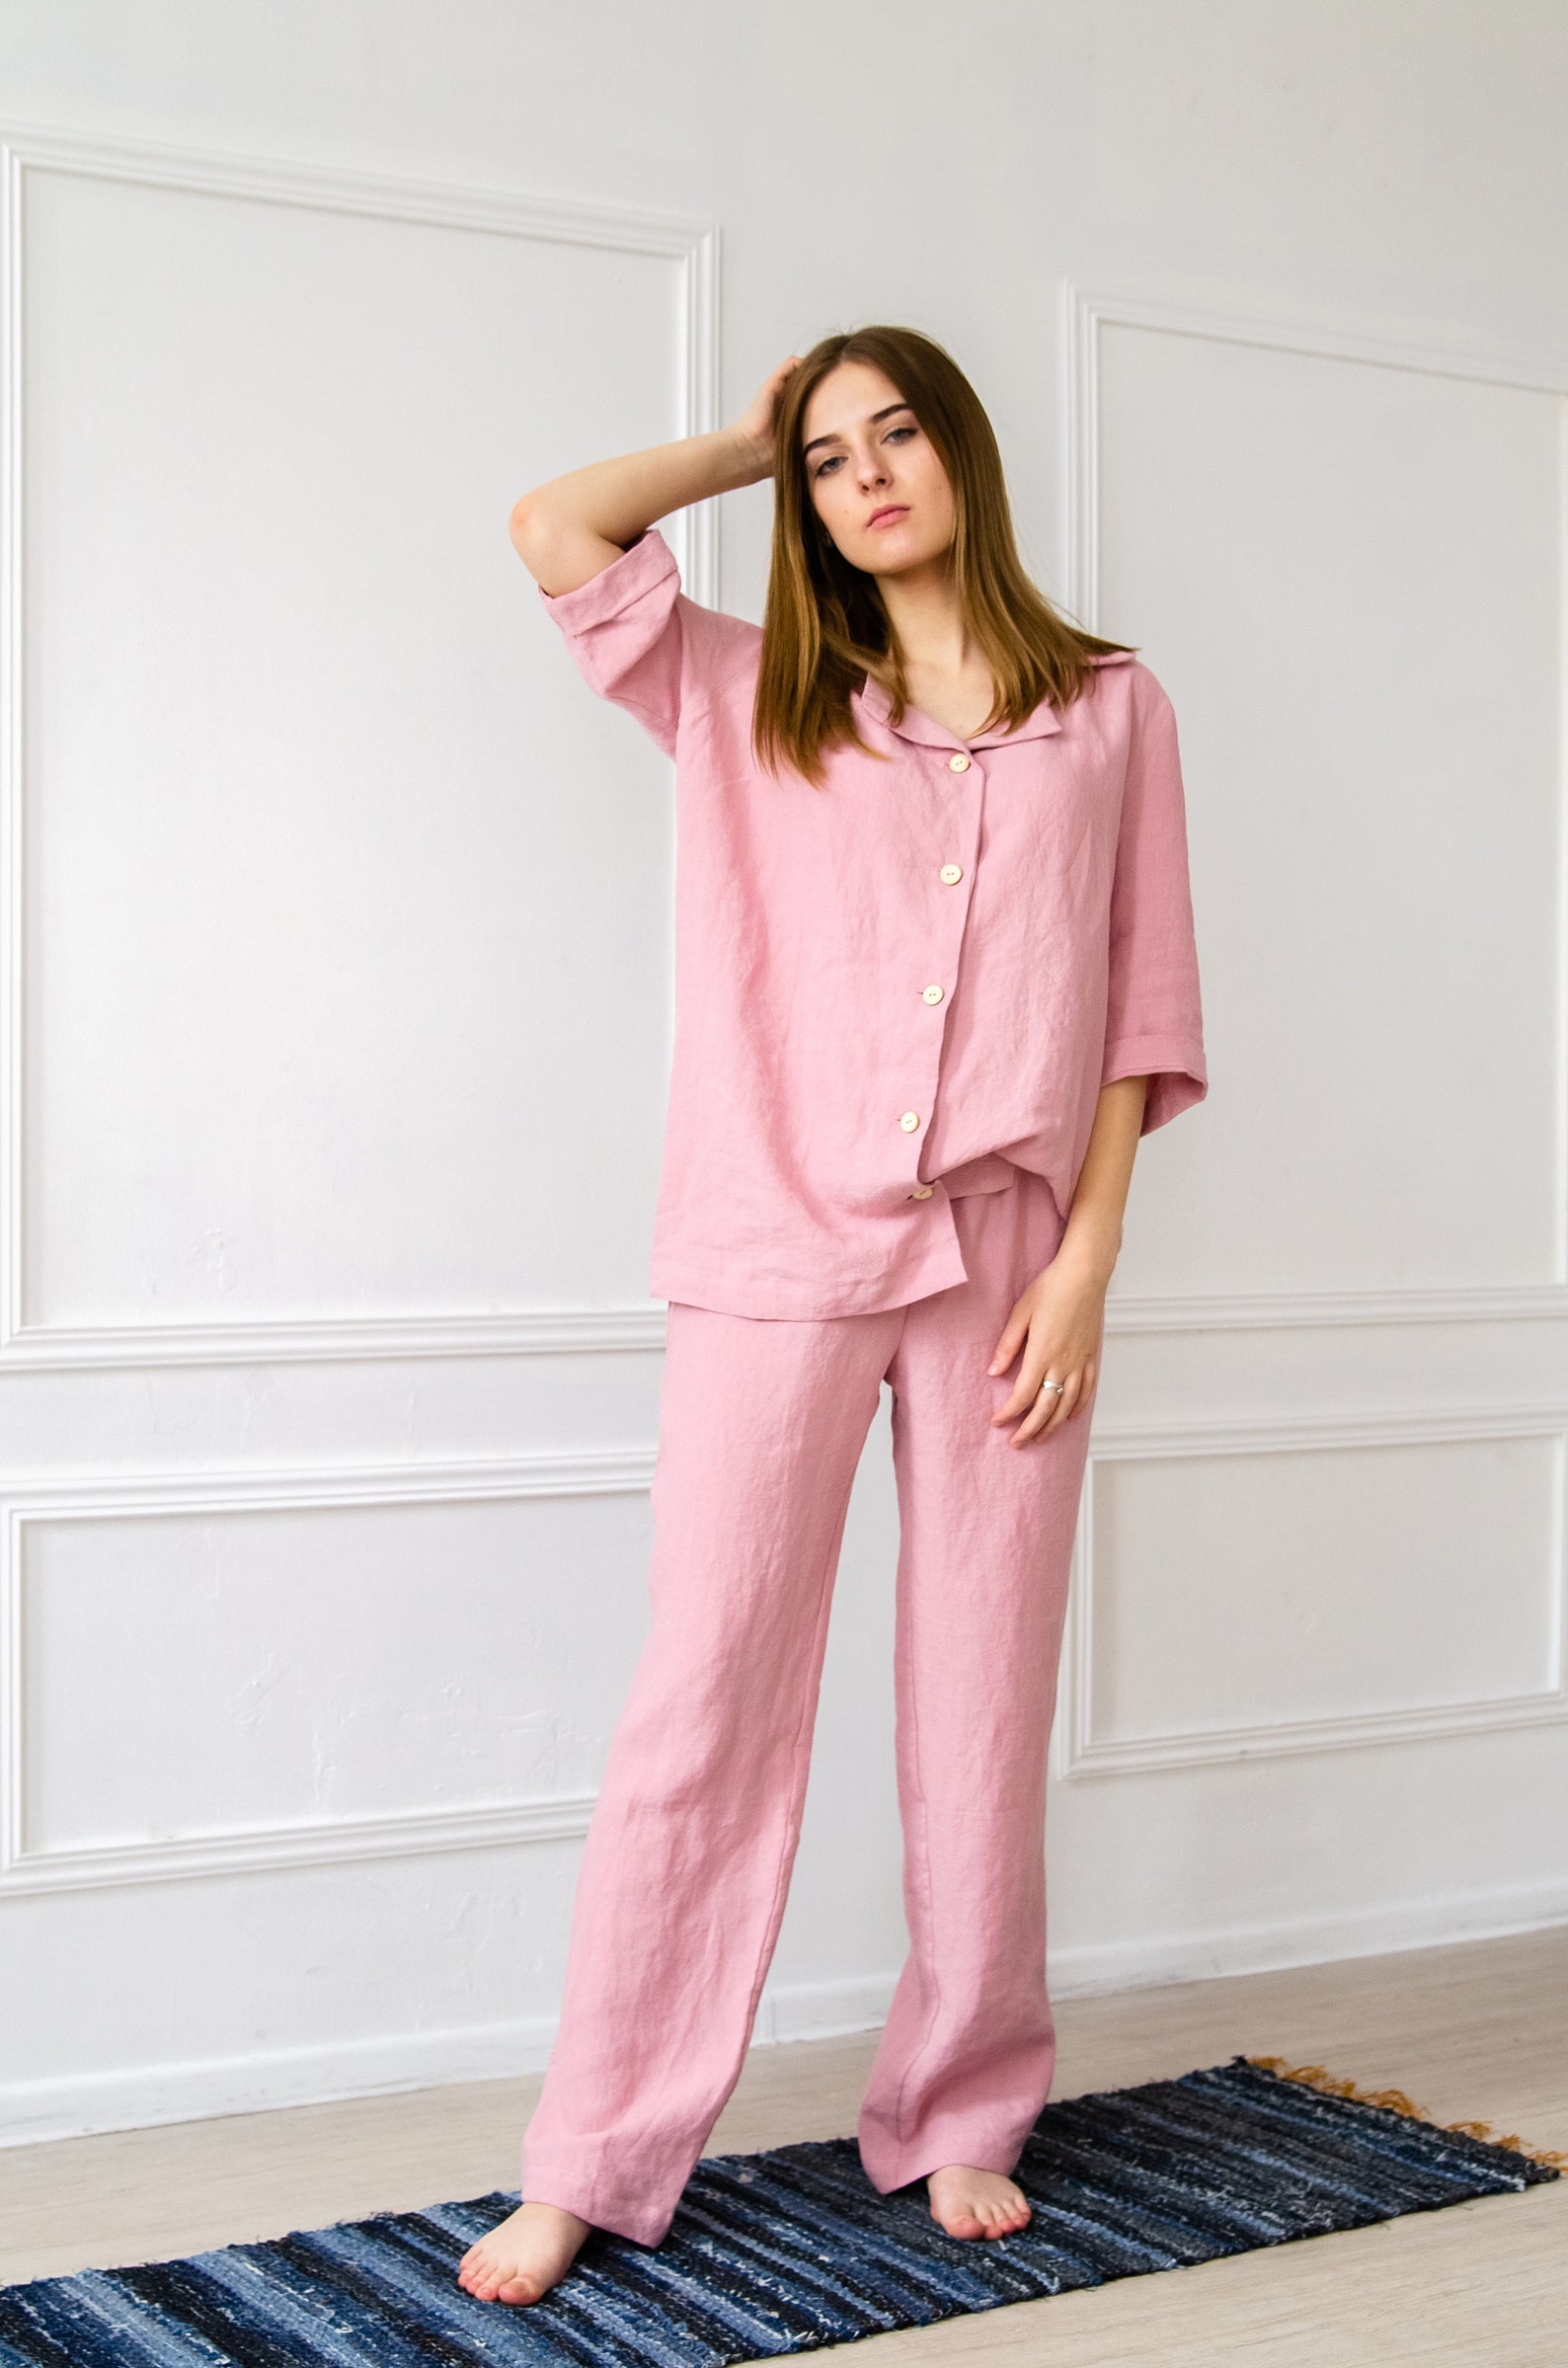 Stonewashed linen Pajama SET For Her / 100% Pure Linen Pajama | Etsy